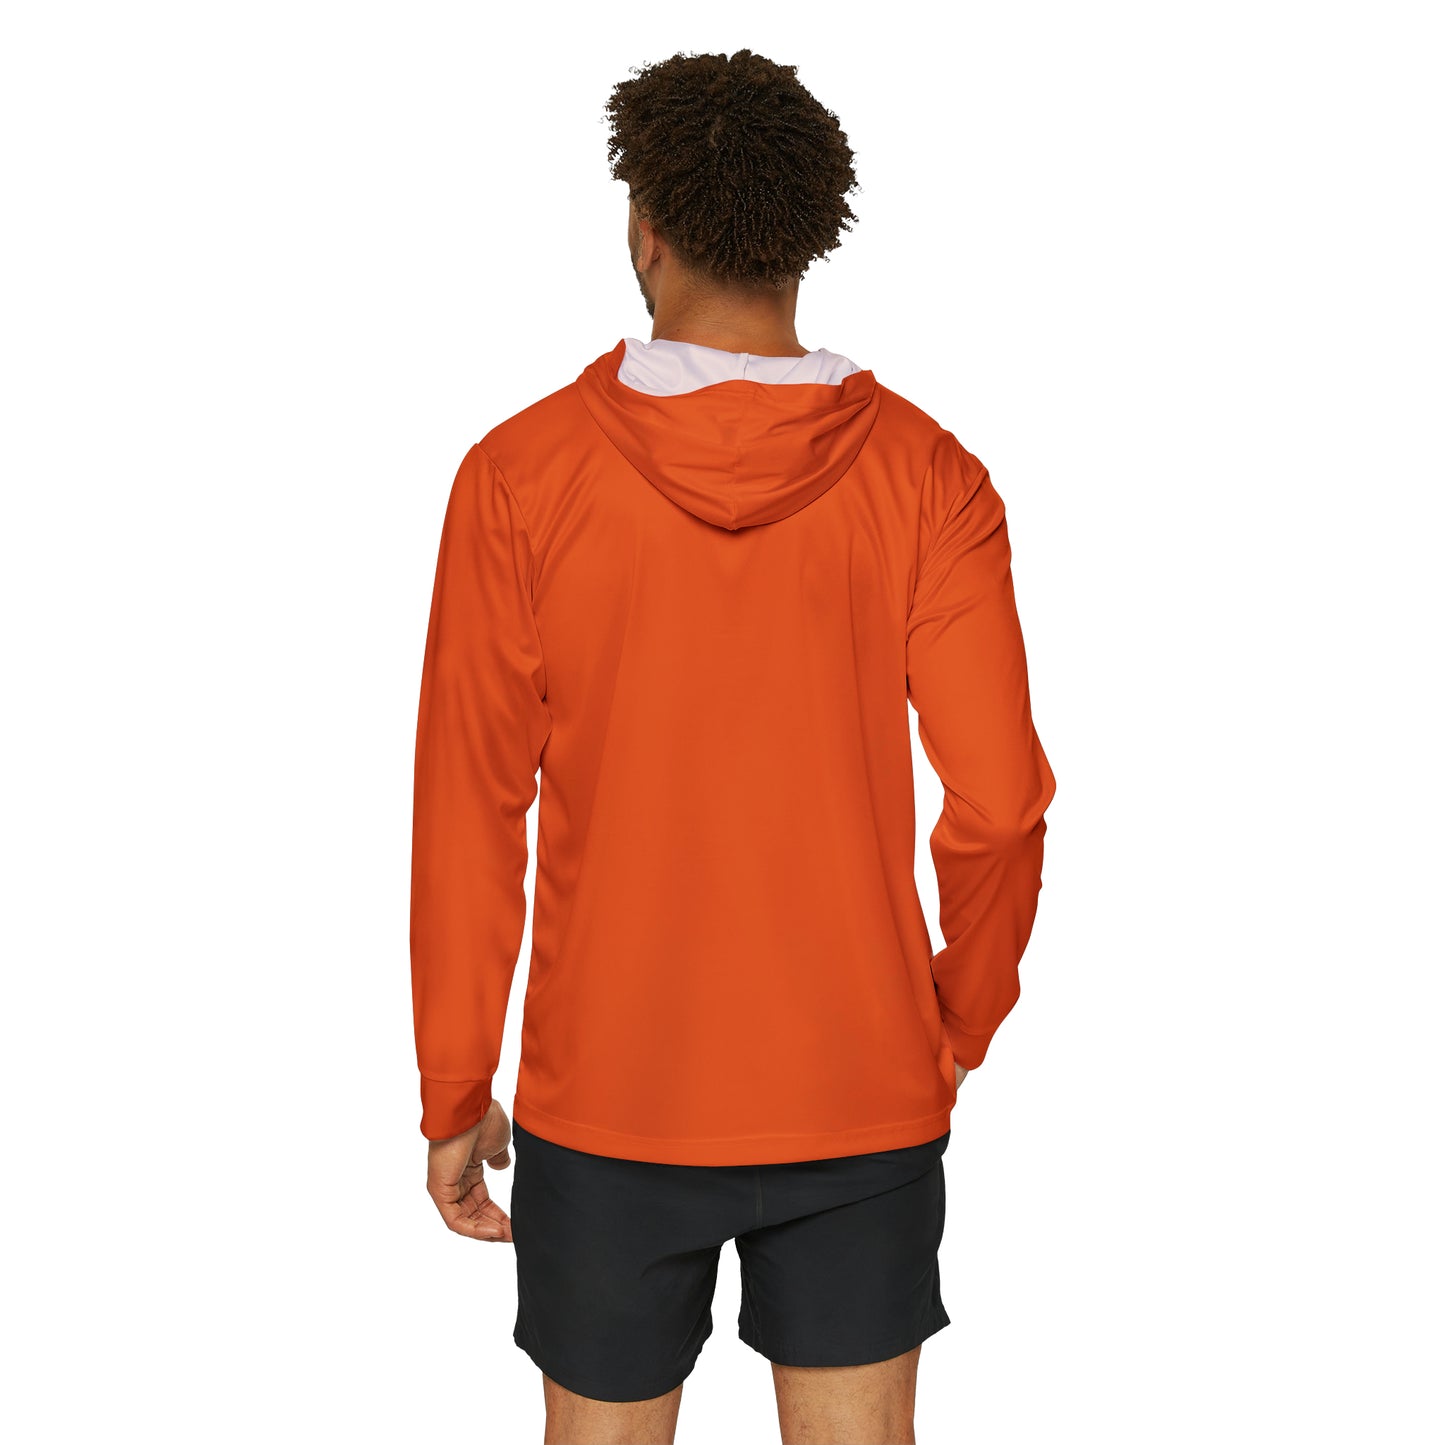 Shall Not - (Orange/Black) Men's Sports Warmup Hoodie